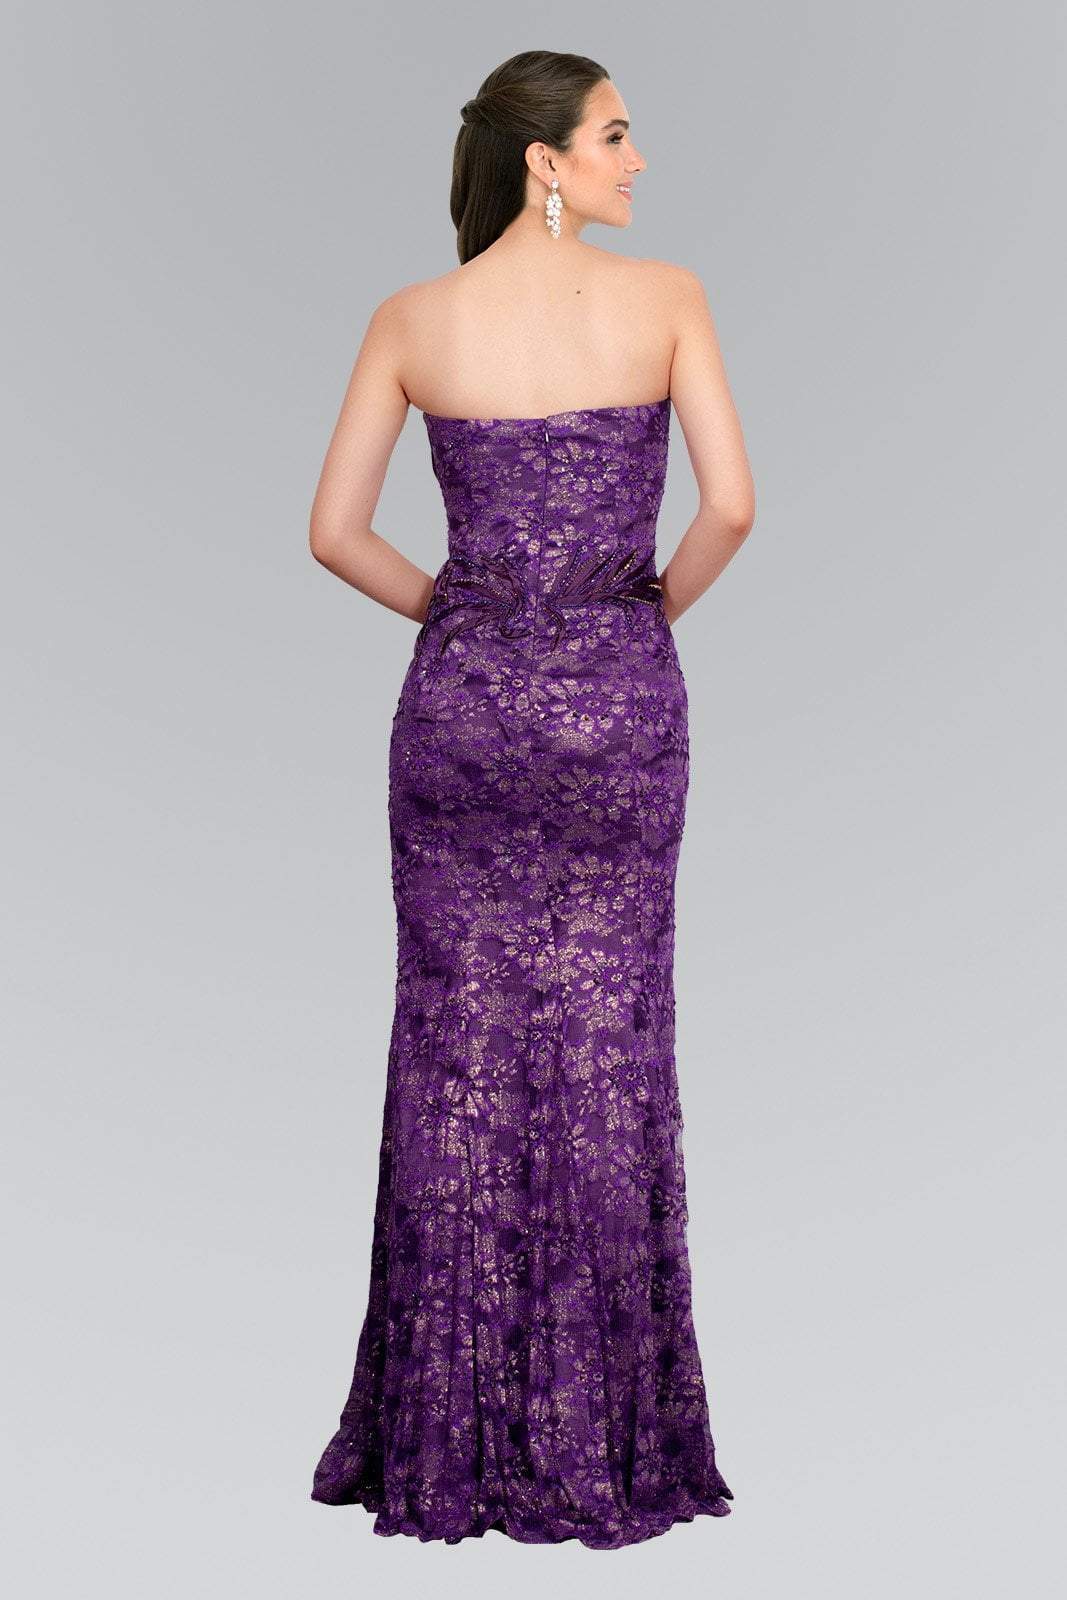 Elizabeth K - GL1006 Strapless Sweetheart Lace Long Dress Special Occasion Dress